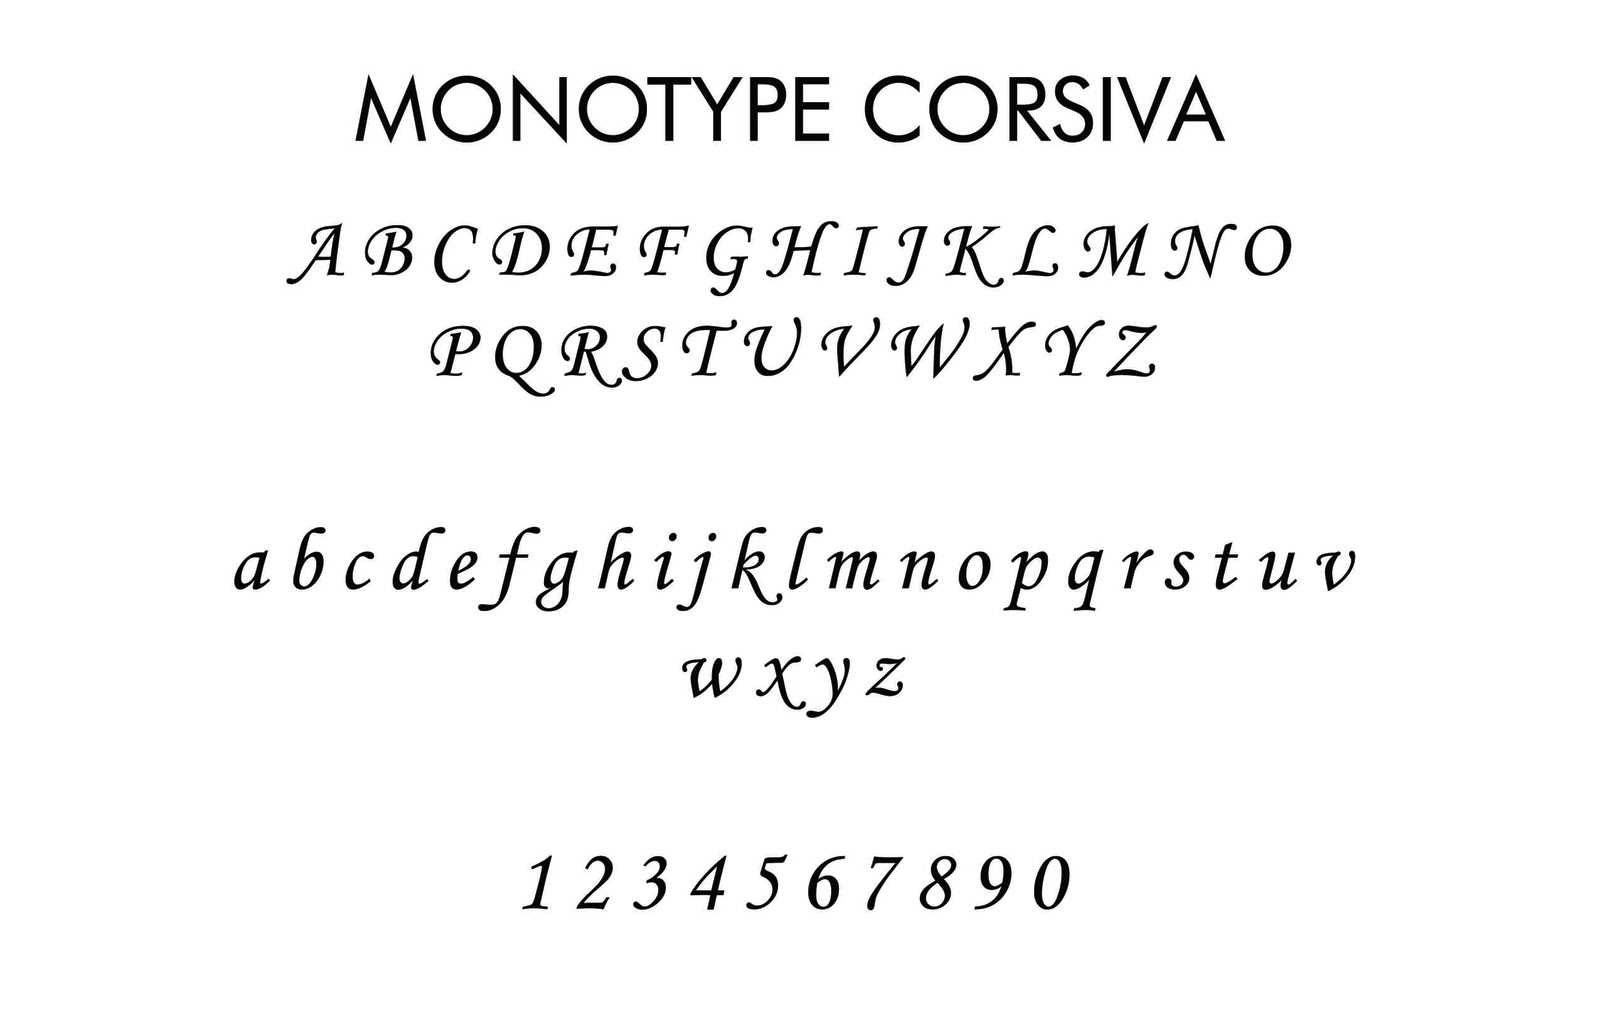 monotype corsiva font family